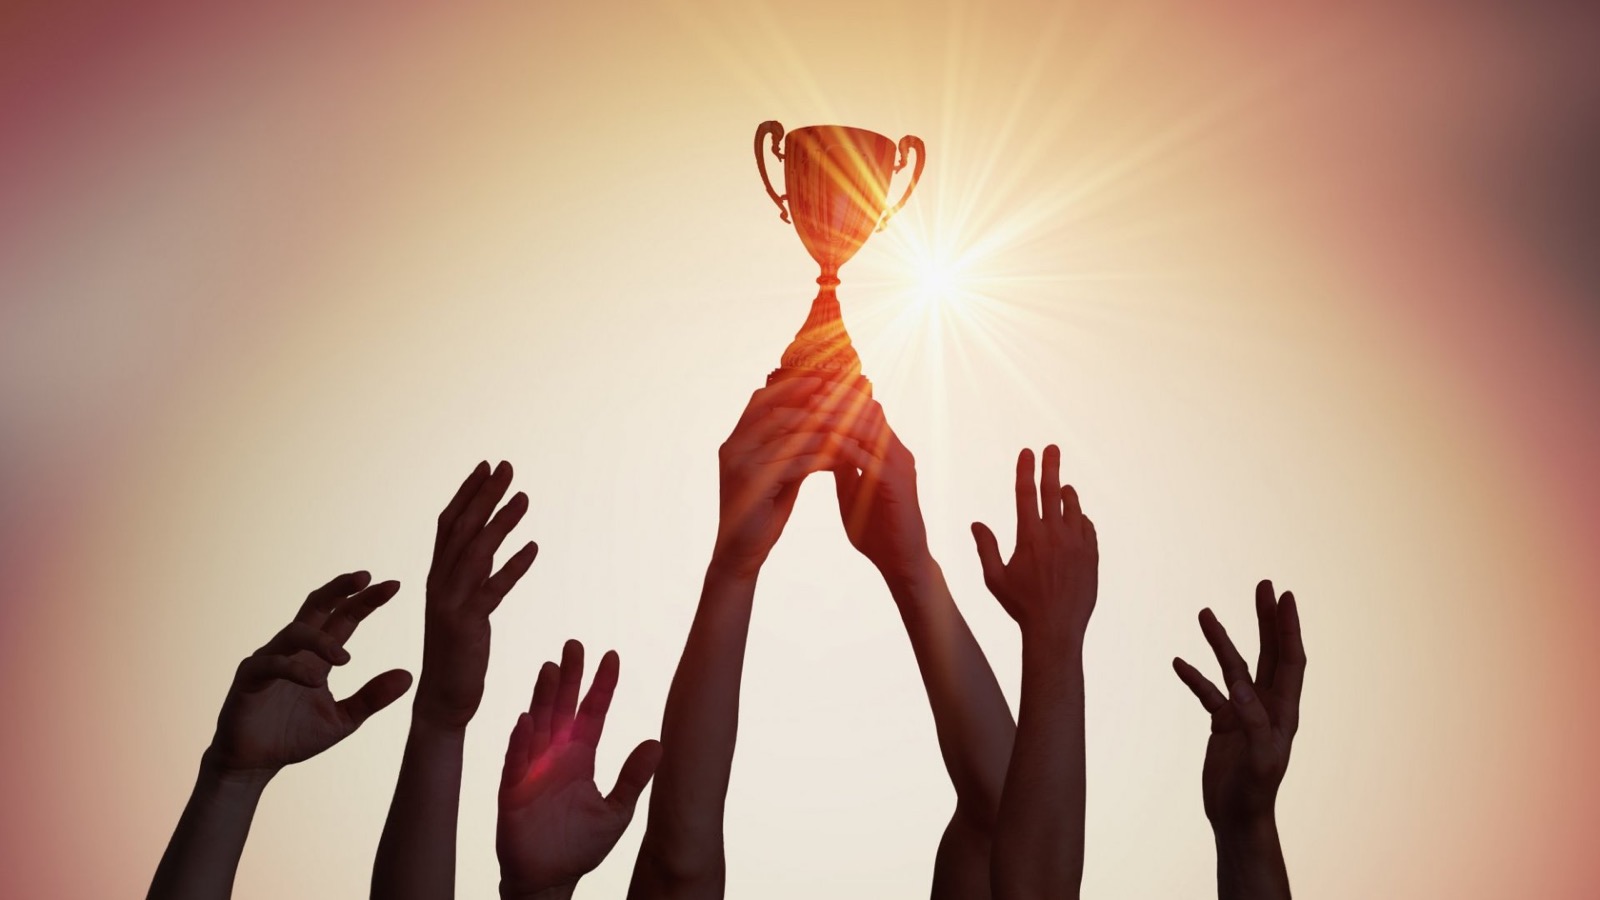 Light Triad Test Award recognition praise success